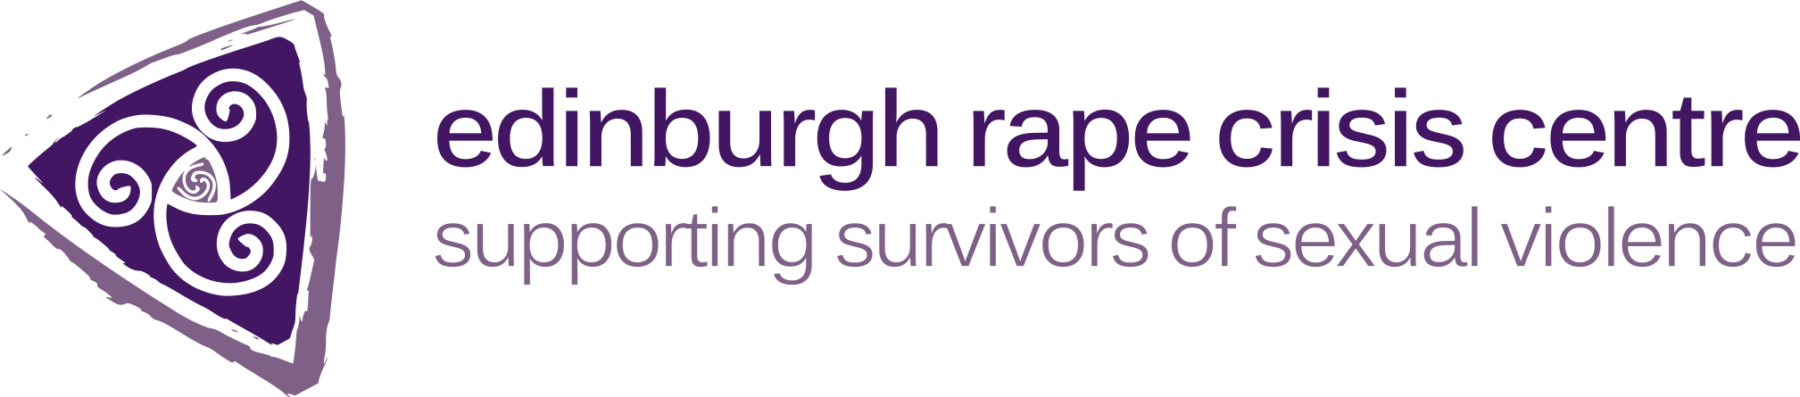 Image of Edinburgh rape crisis logo